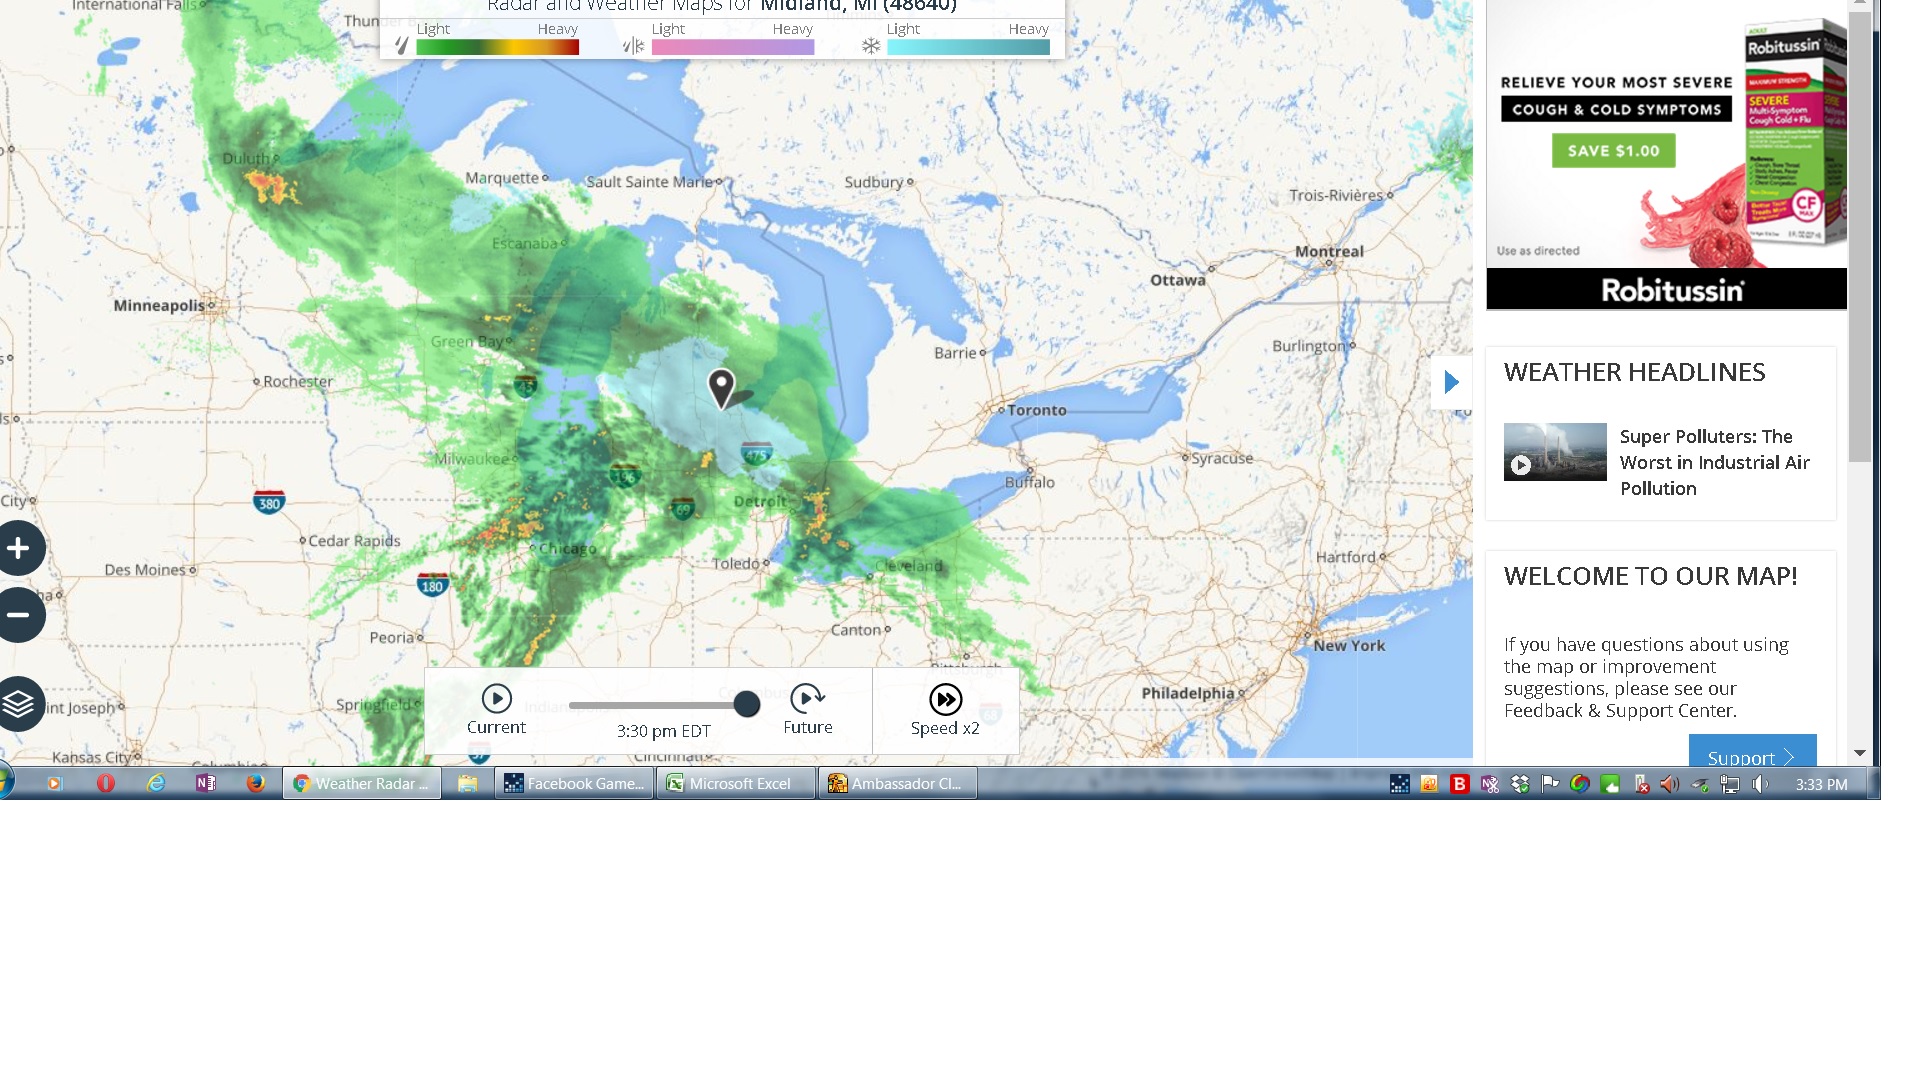 https://weather.com/weather/radar/interactive/l/48640:4:US